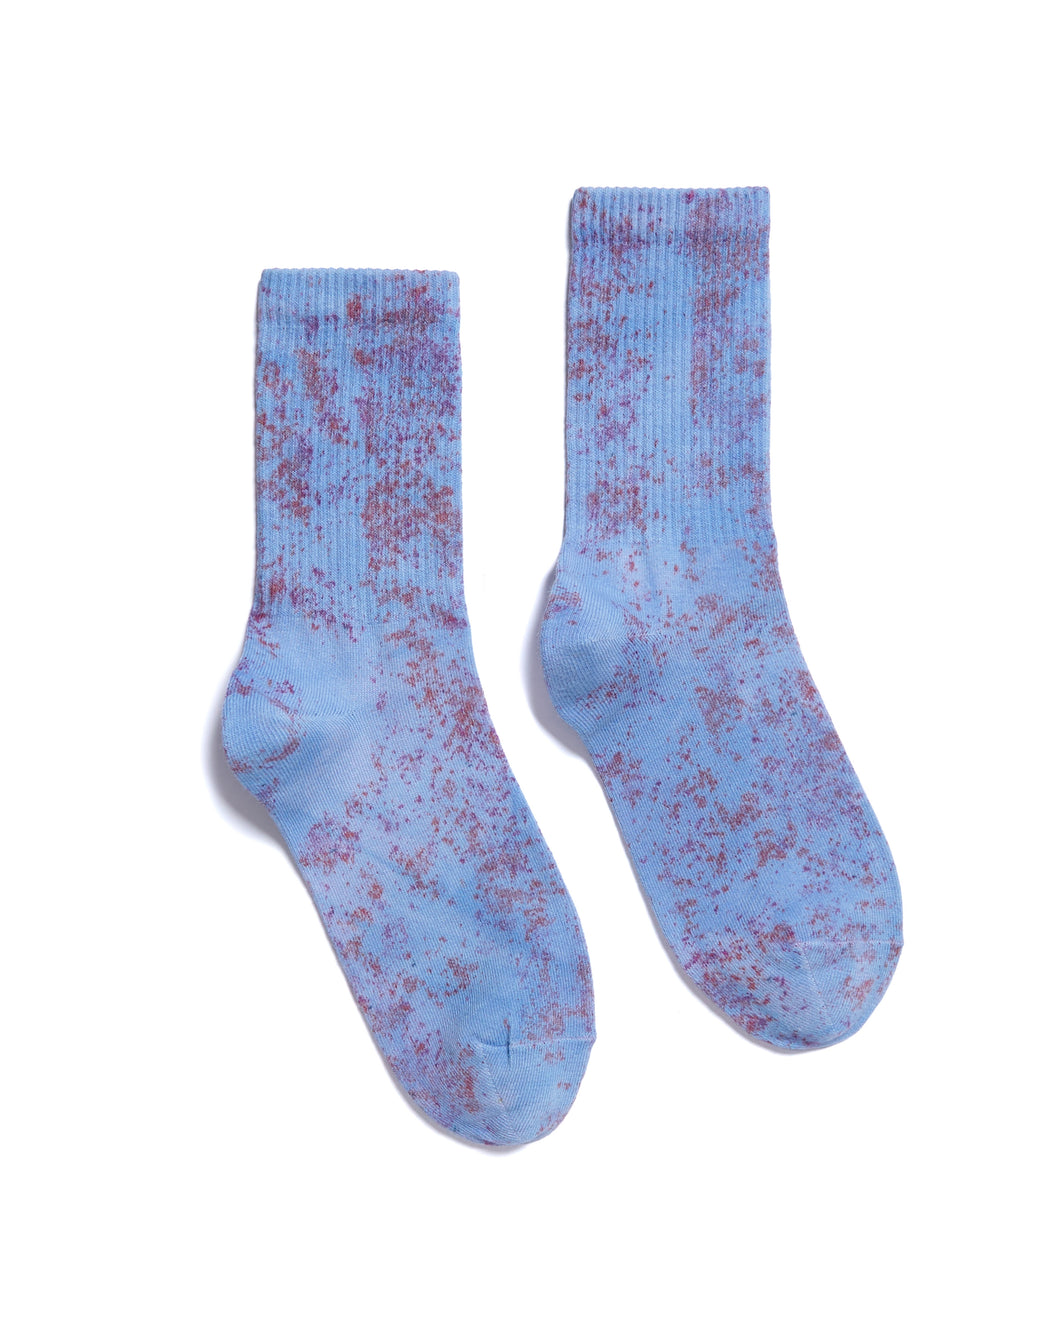 Crocus Speckle Hand-dyed Socks